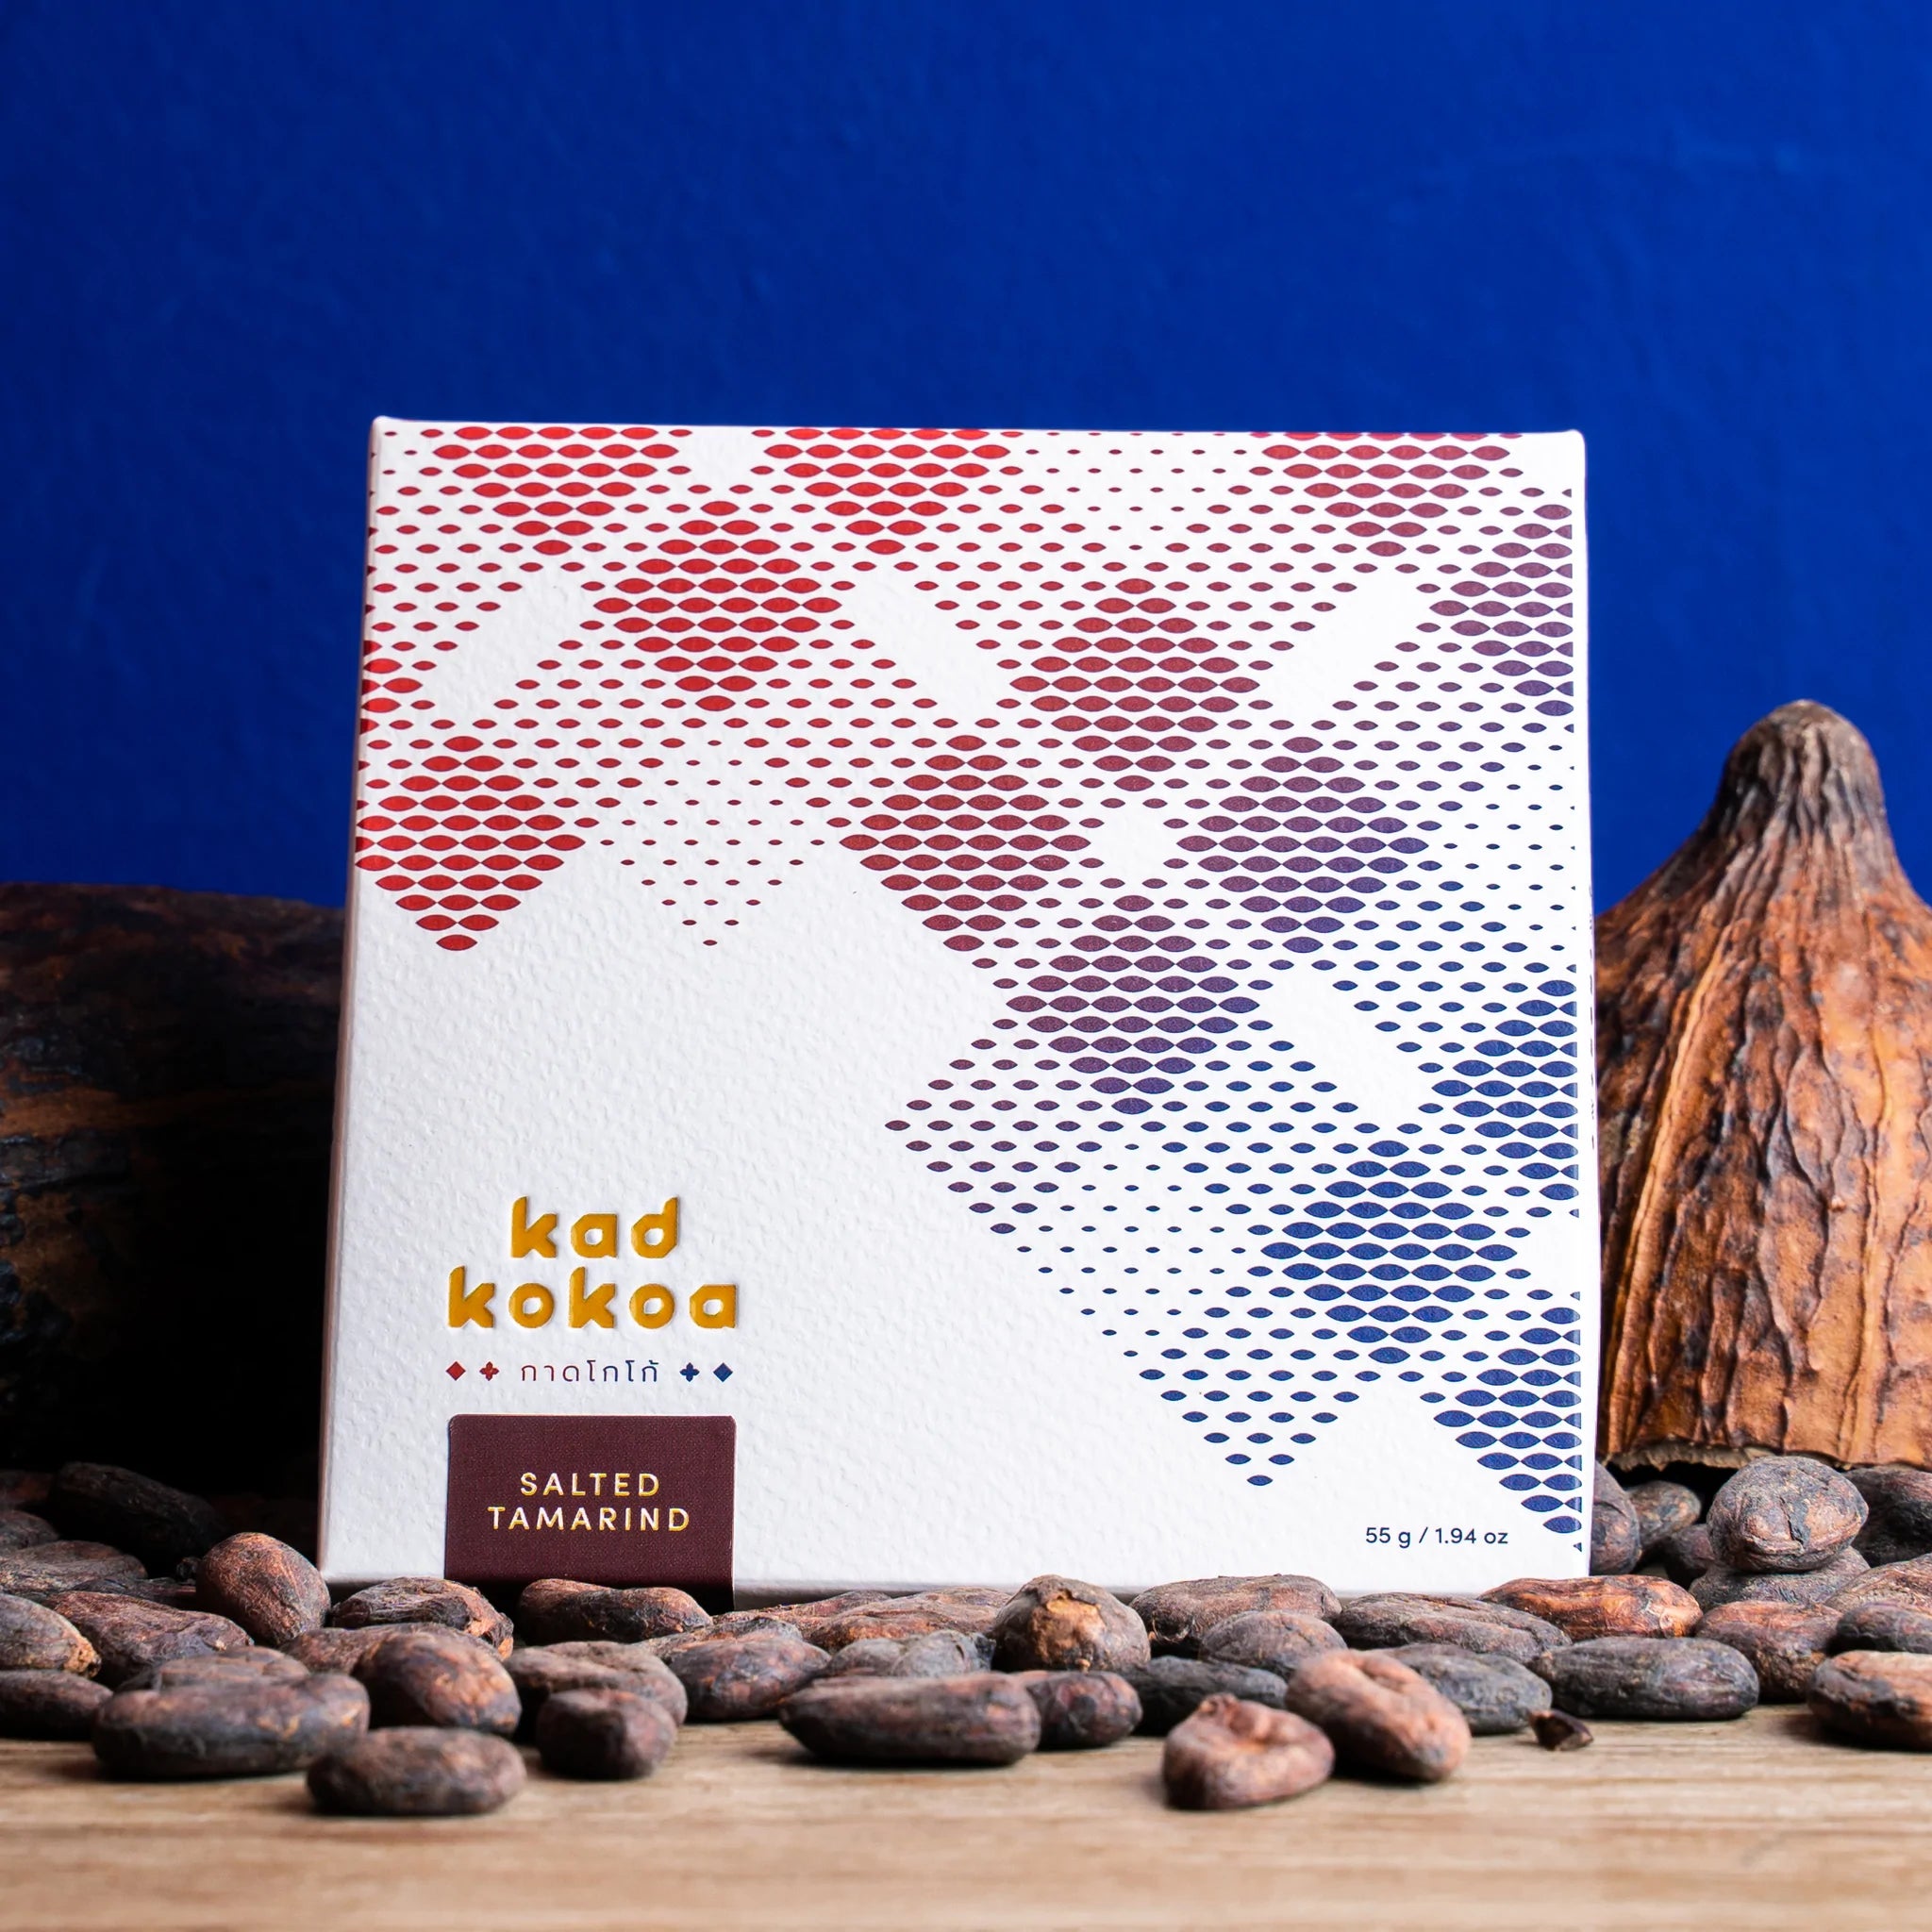 Chocolate for gifts | Kad Kokoa Salted Tamarind